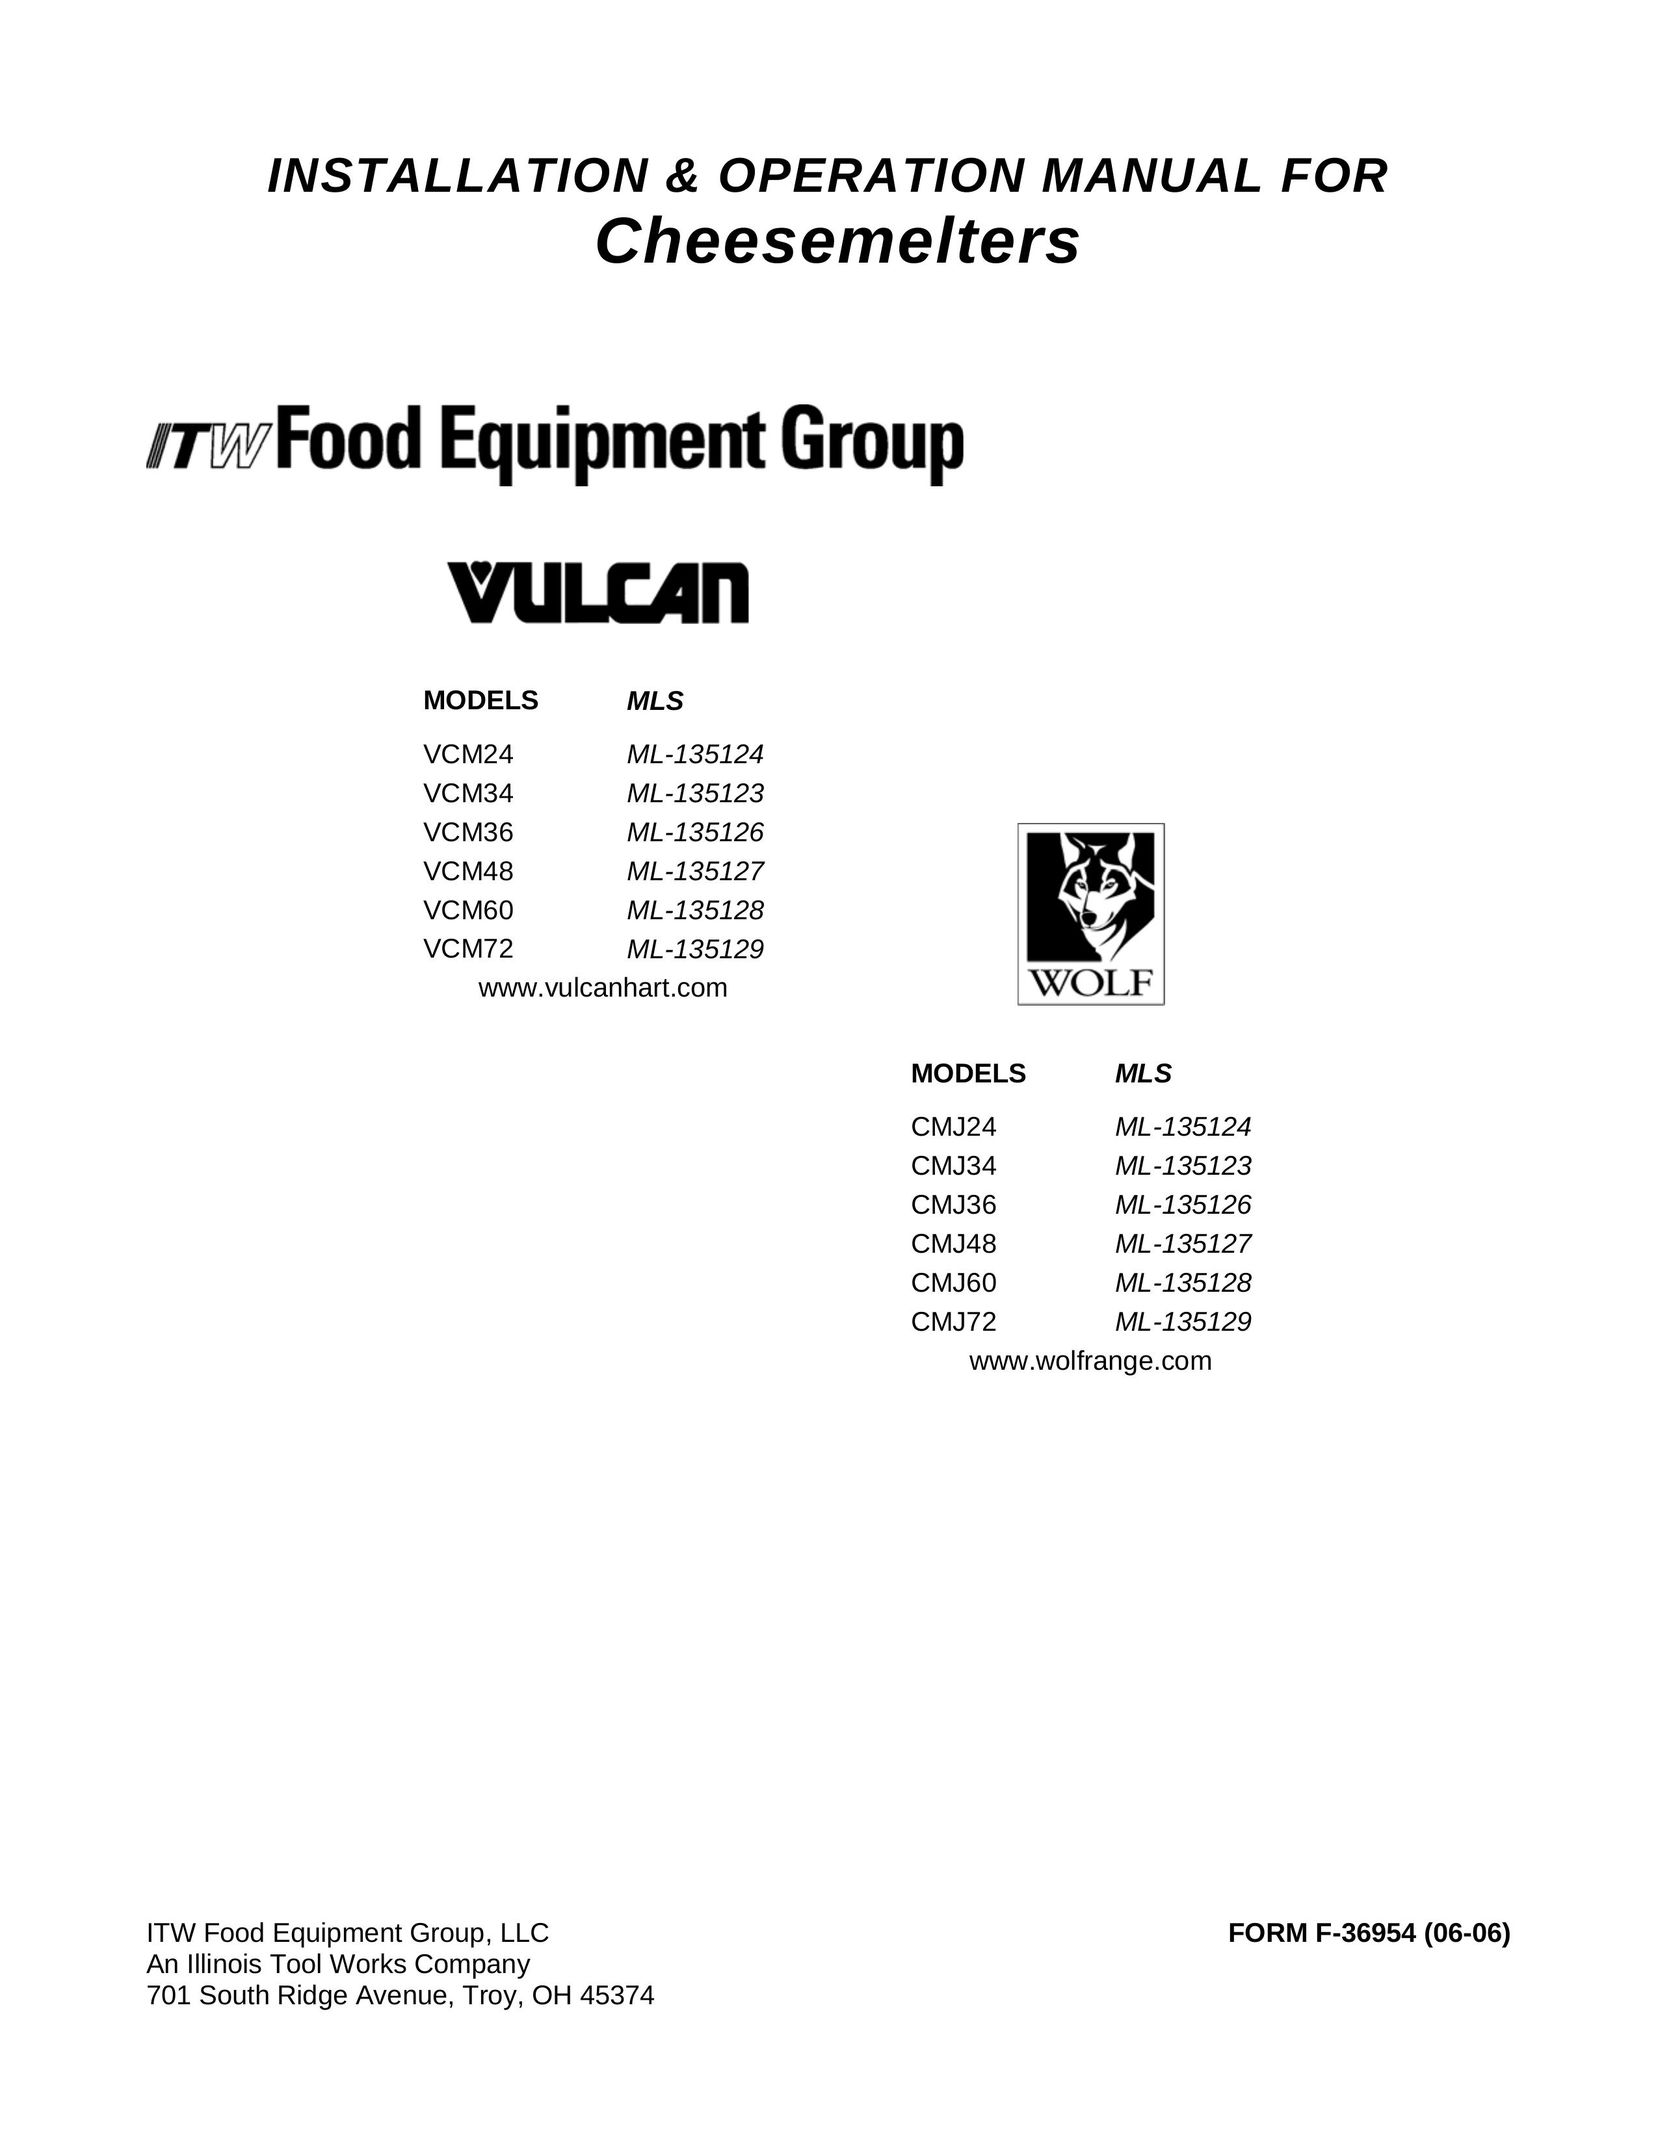 Vulcan-Hart VCM24 ML-135124 Fondue Maker User Manual